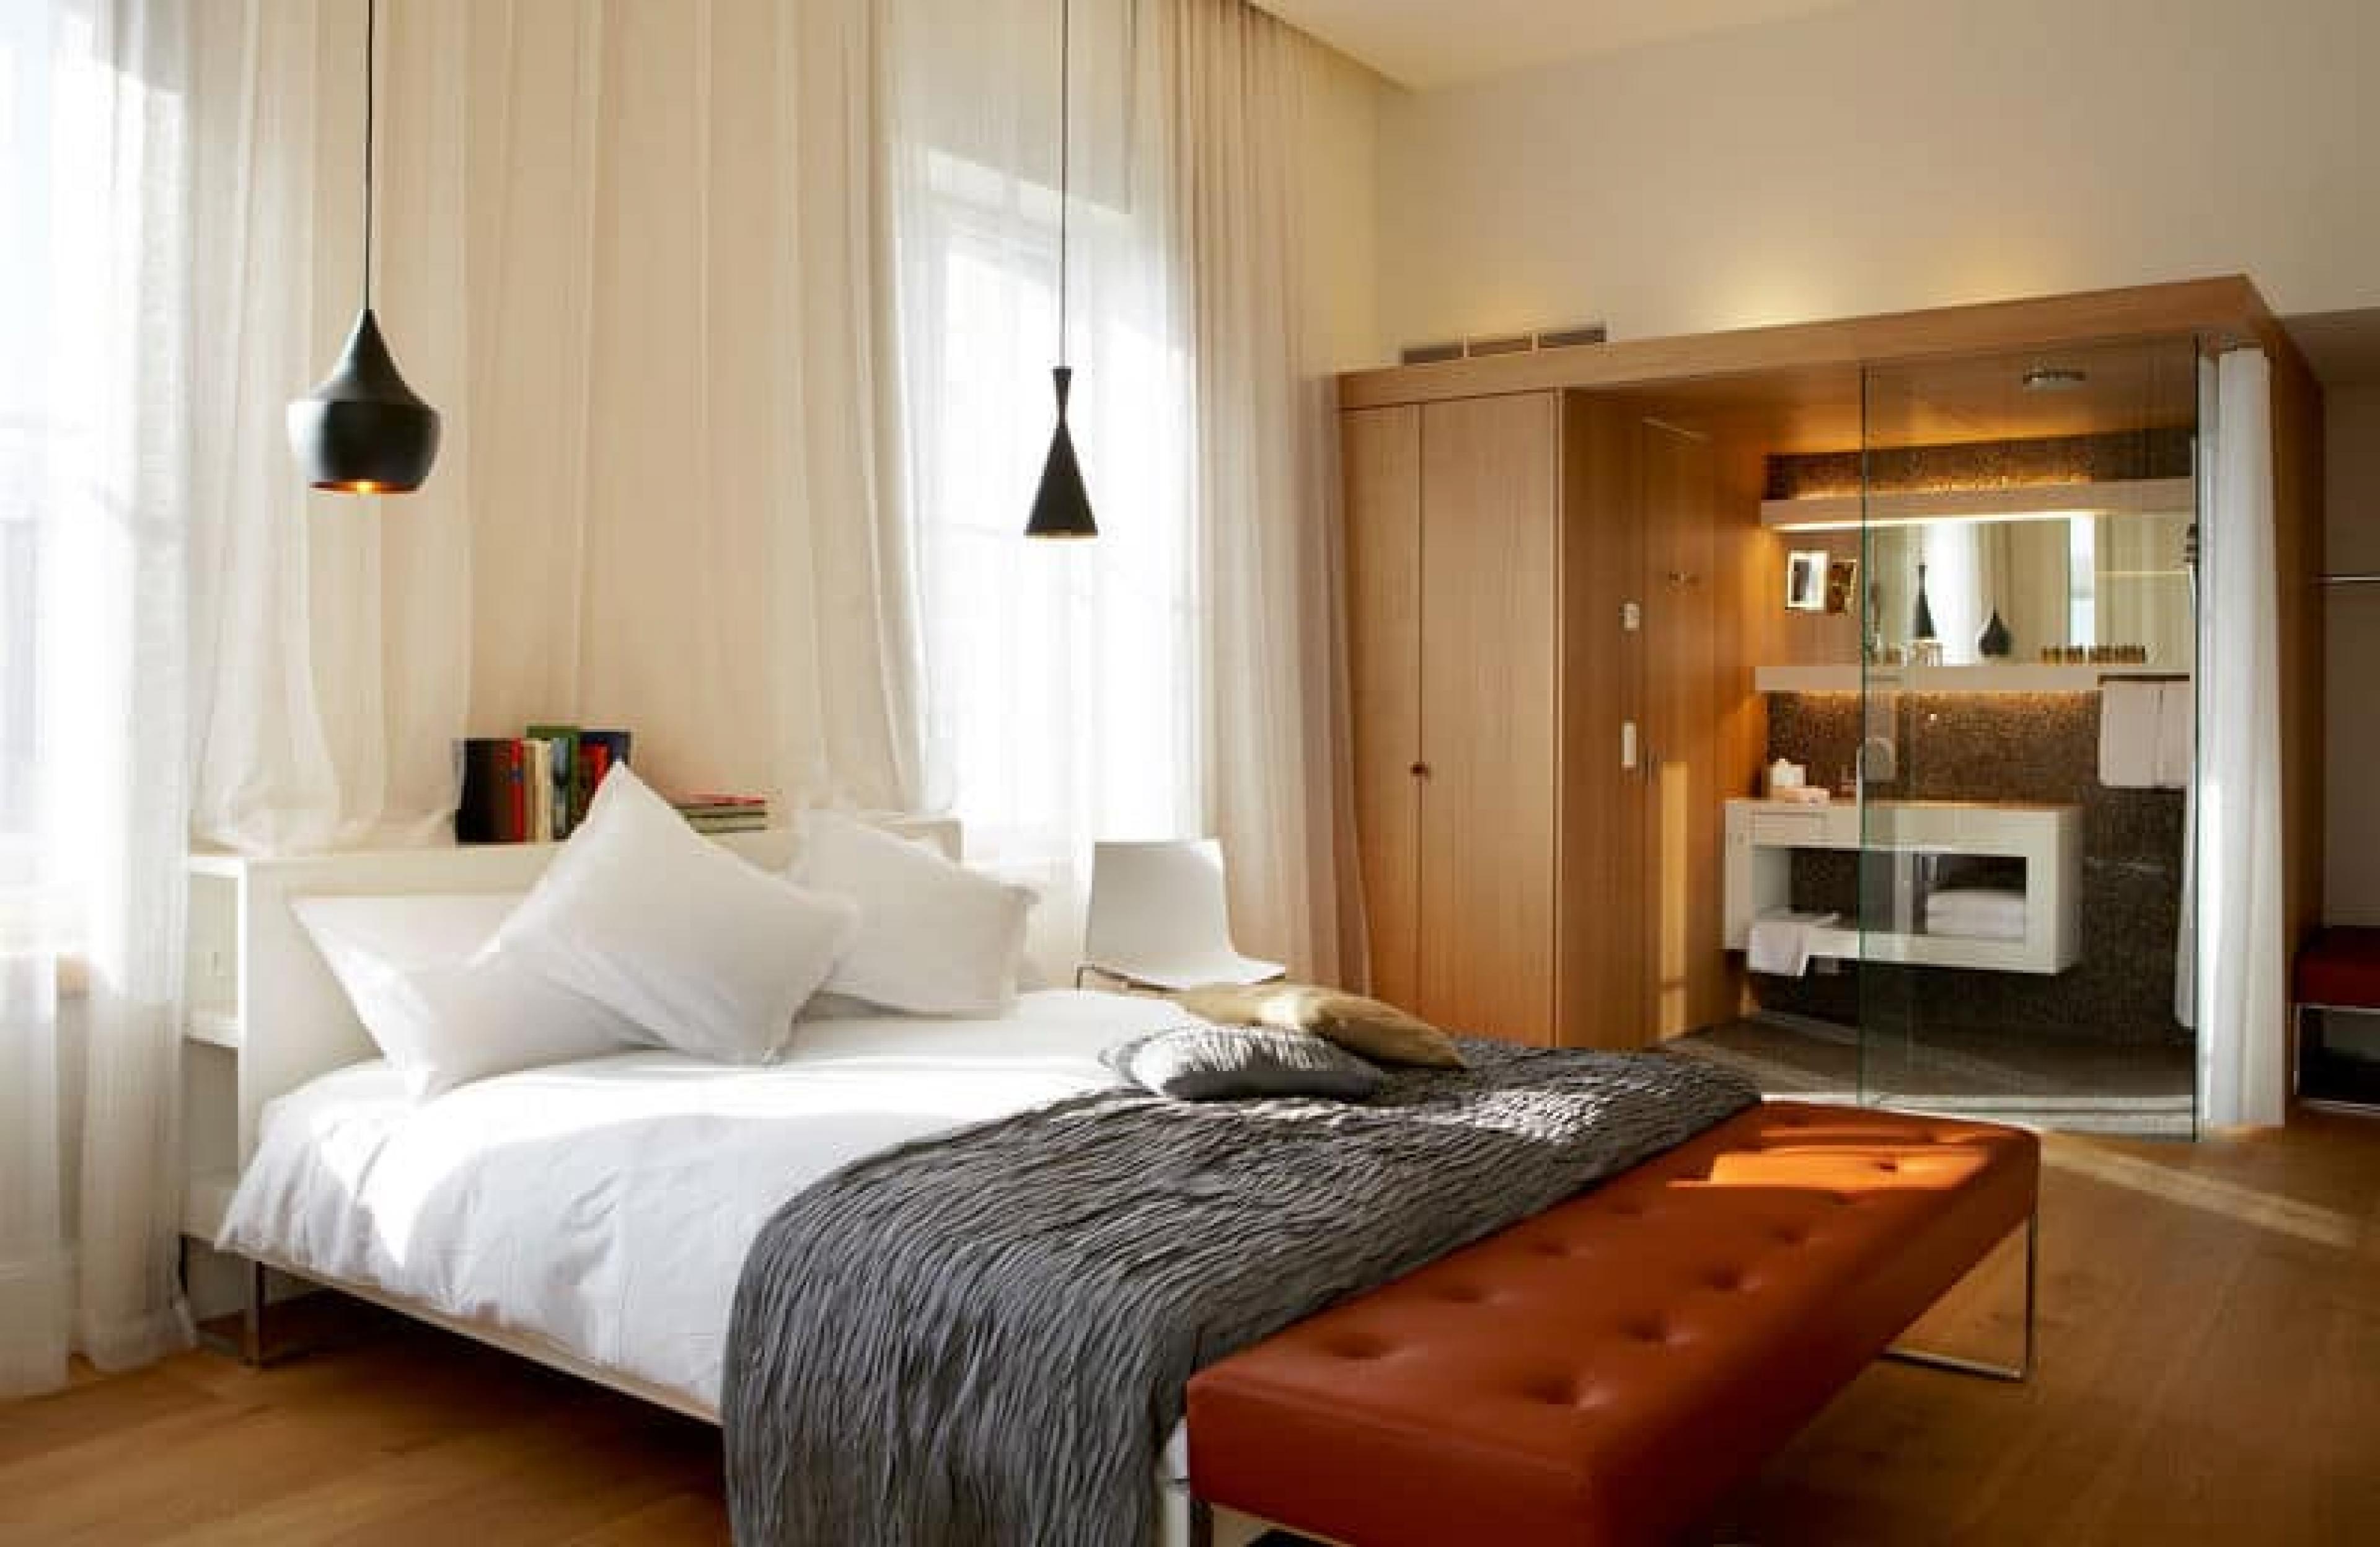 Interiors of Bedroom at B2 Boutique Hotel + Spa, Zurich, Switzerland